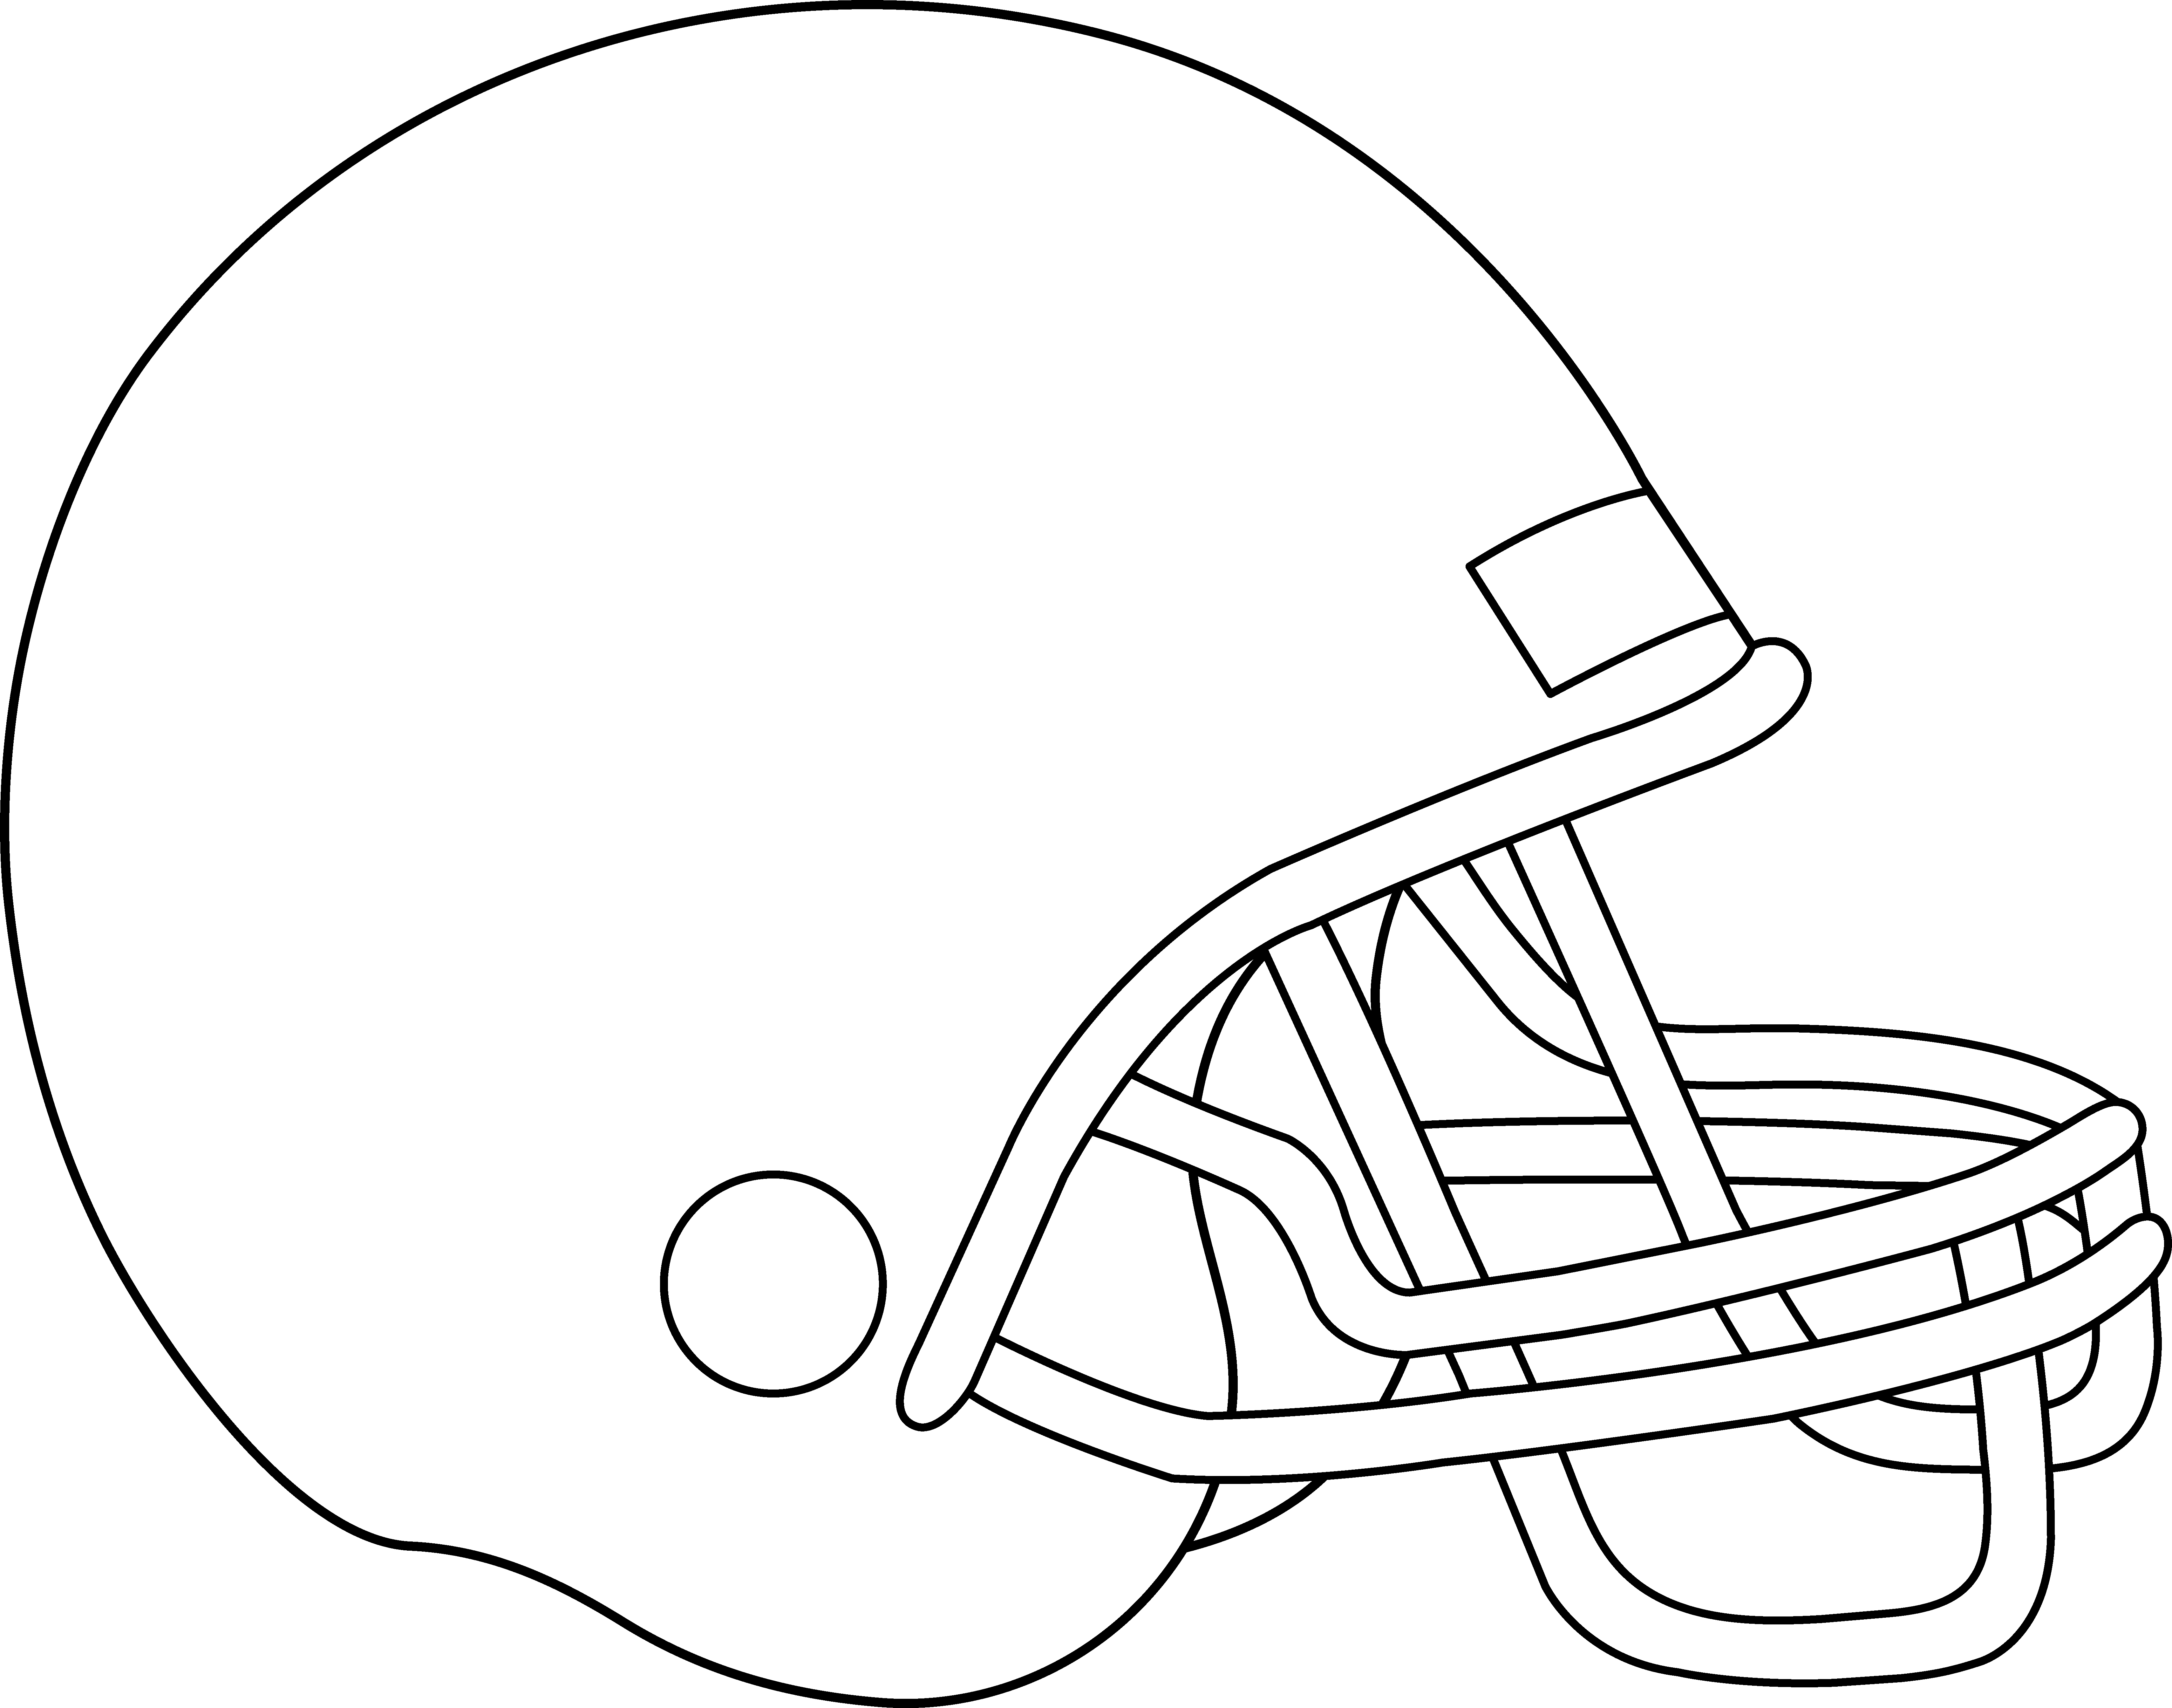 Blank Football Helmet For Coloring - Free Clip Art